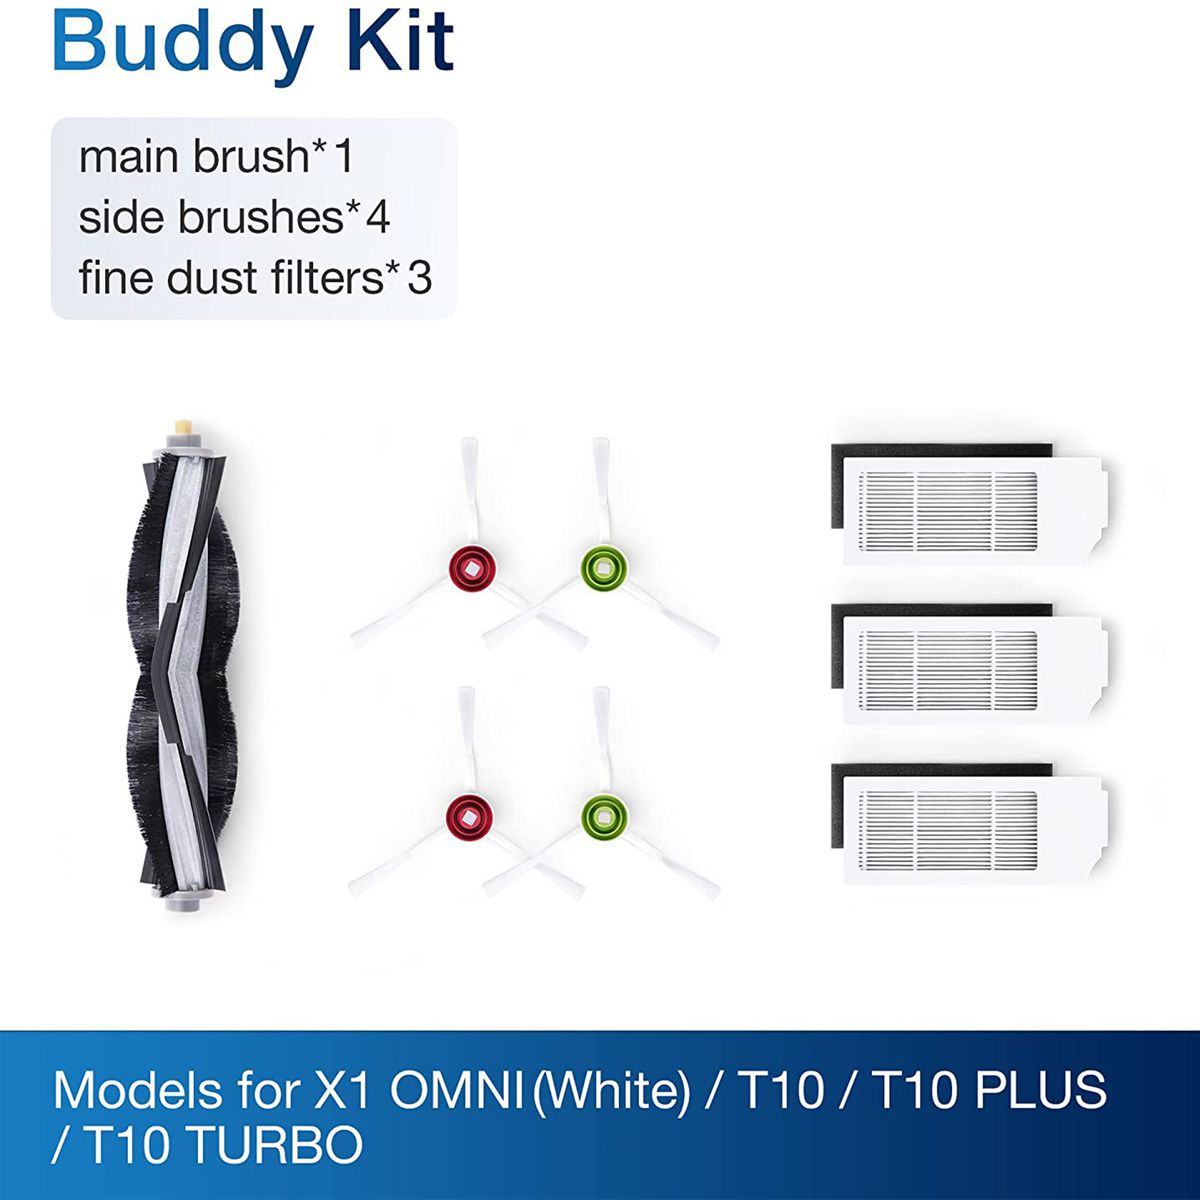 DEEBOT X1 OMNI/X1e OMNI/T10 Buddy Kit - 5 Brush, 3 Filter/Sponge - UNBOXED DEAL